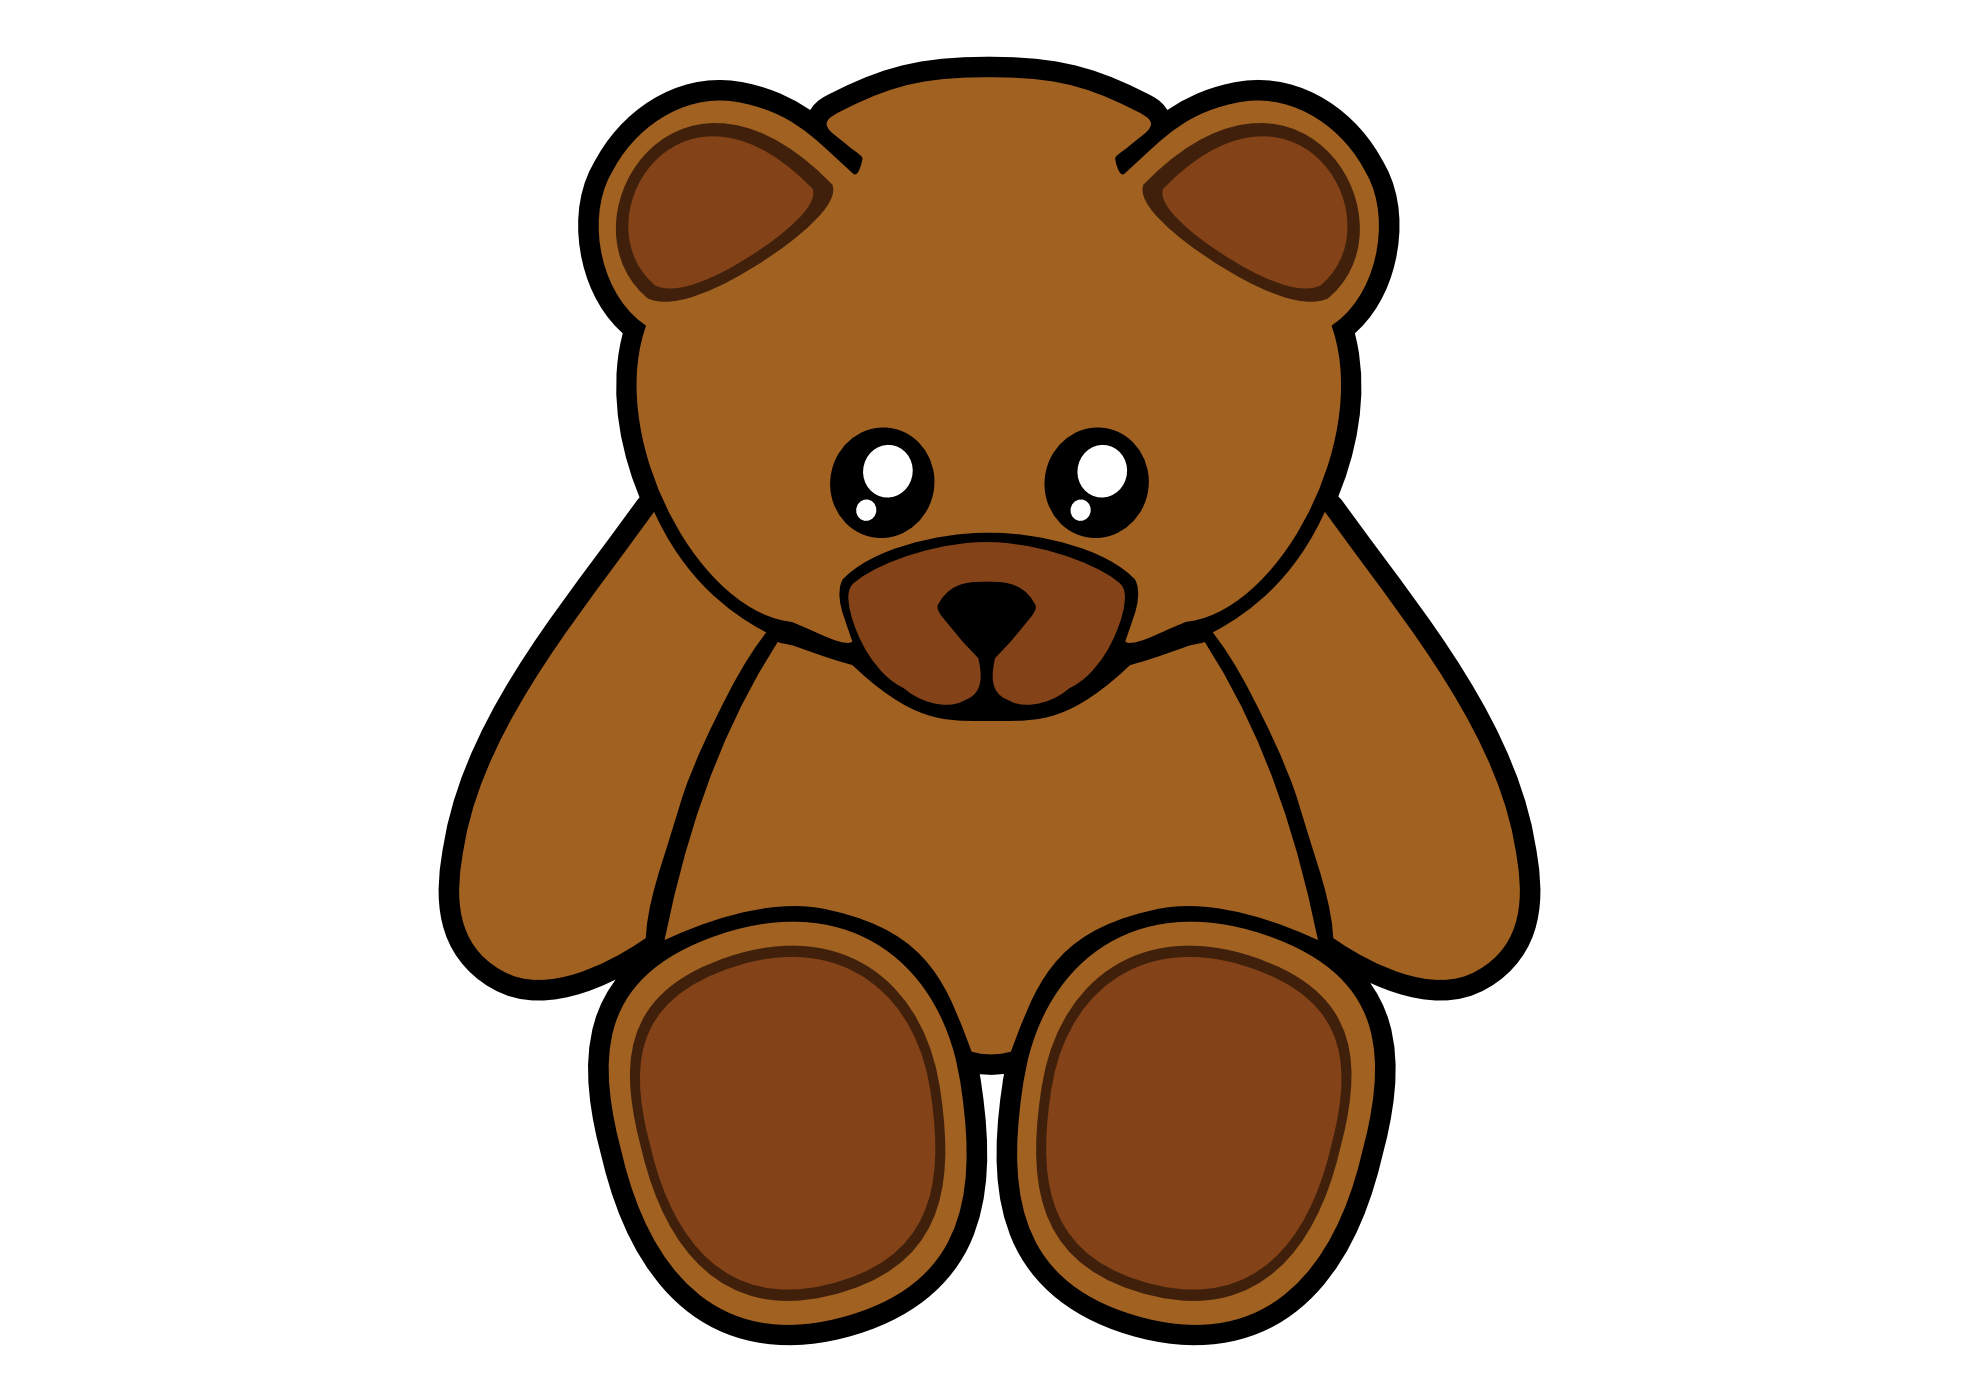 Teddy Bear Clip Art Images - ClipArt Best